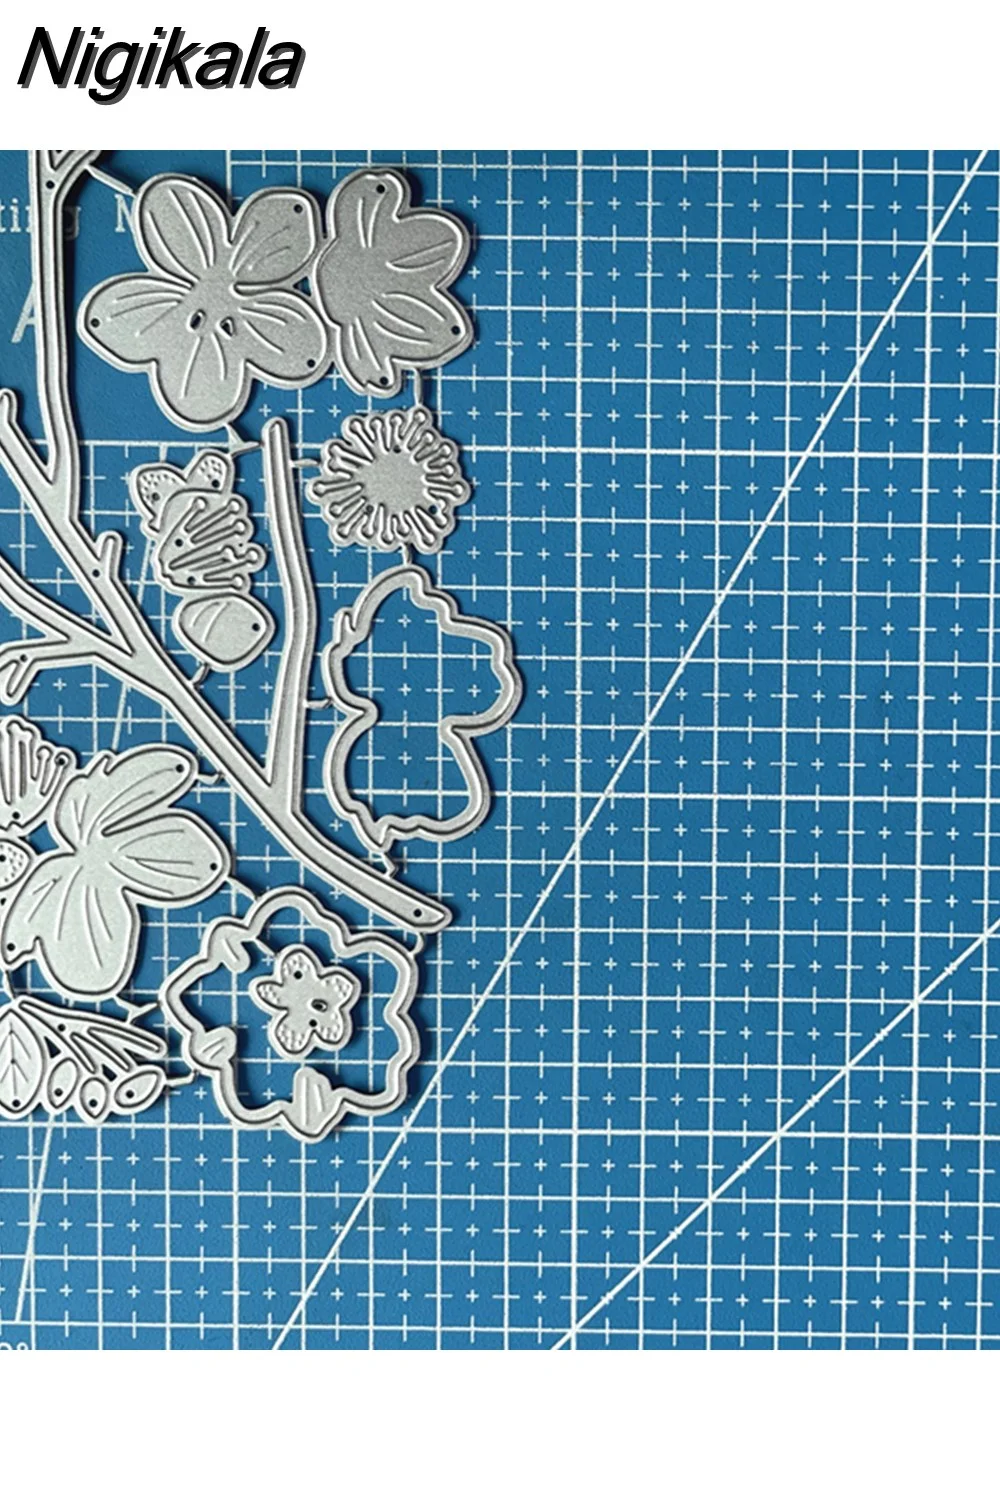 Nigikala Goddess Metal Cutting Dies Cherry Blossoms Diy Scrapbooking Photo Album Decorative Embossing Paper Card Crafts